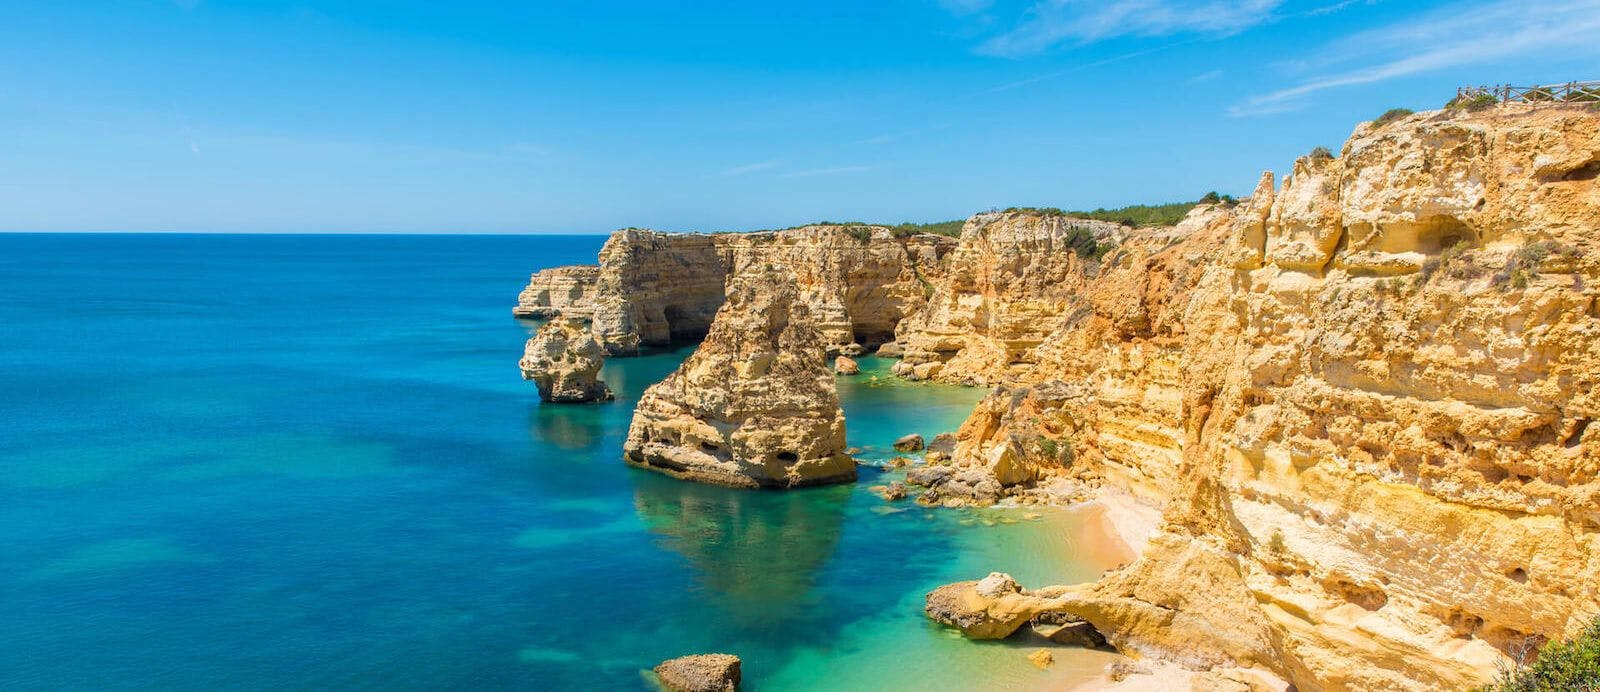 Dramatic rocky Algarve coastline